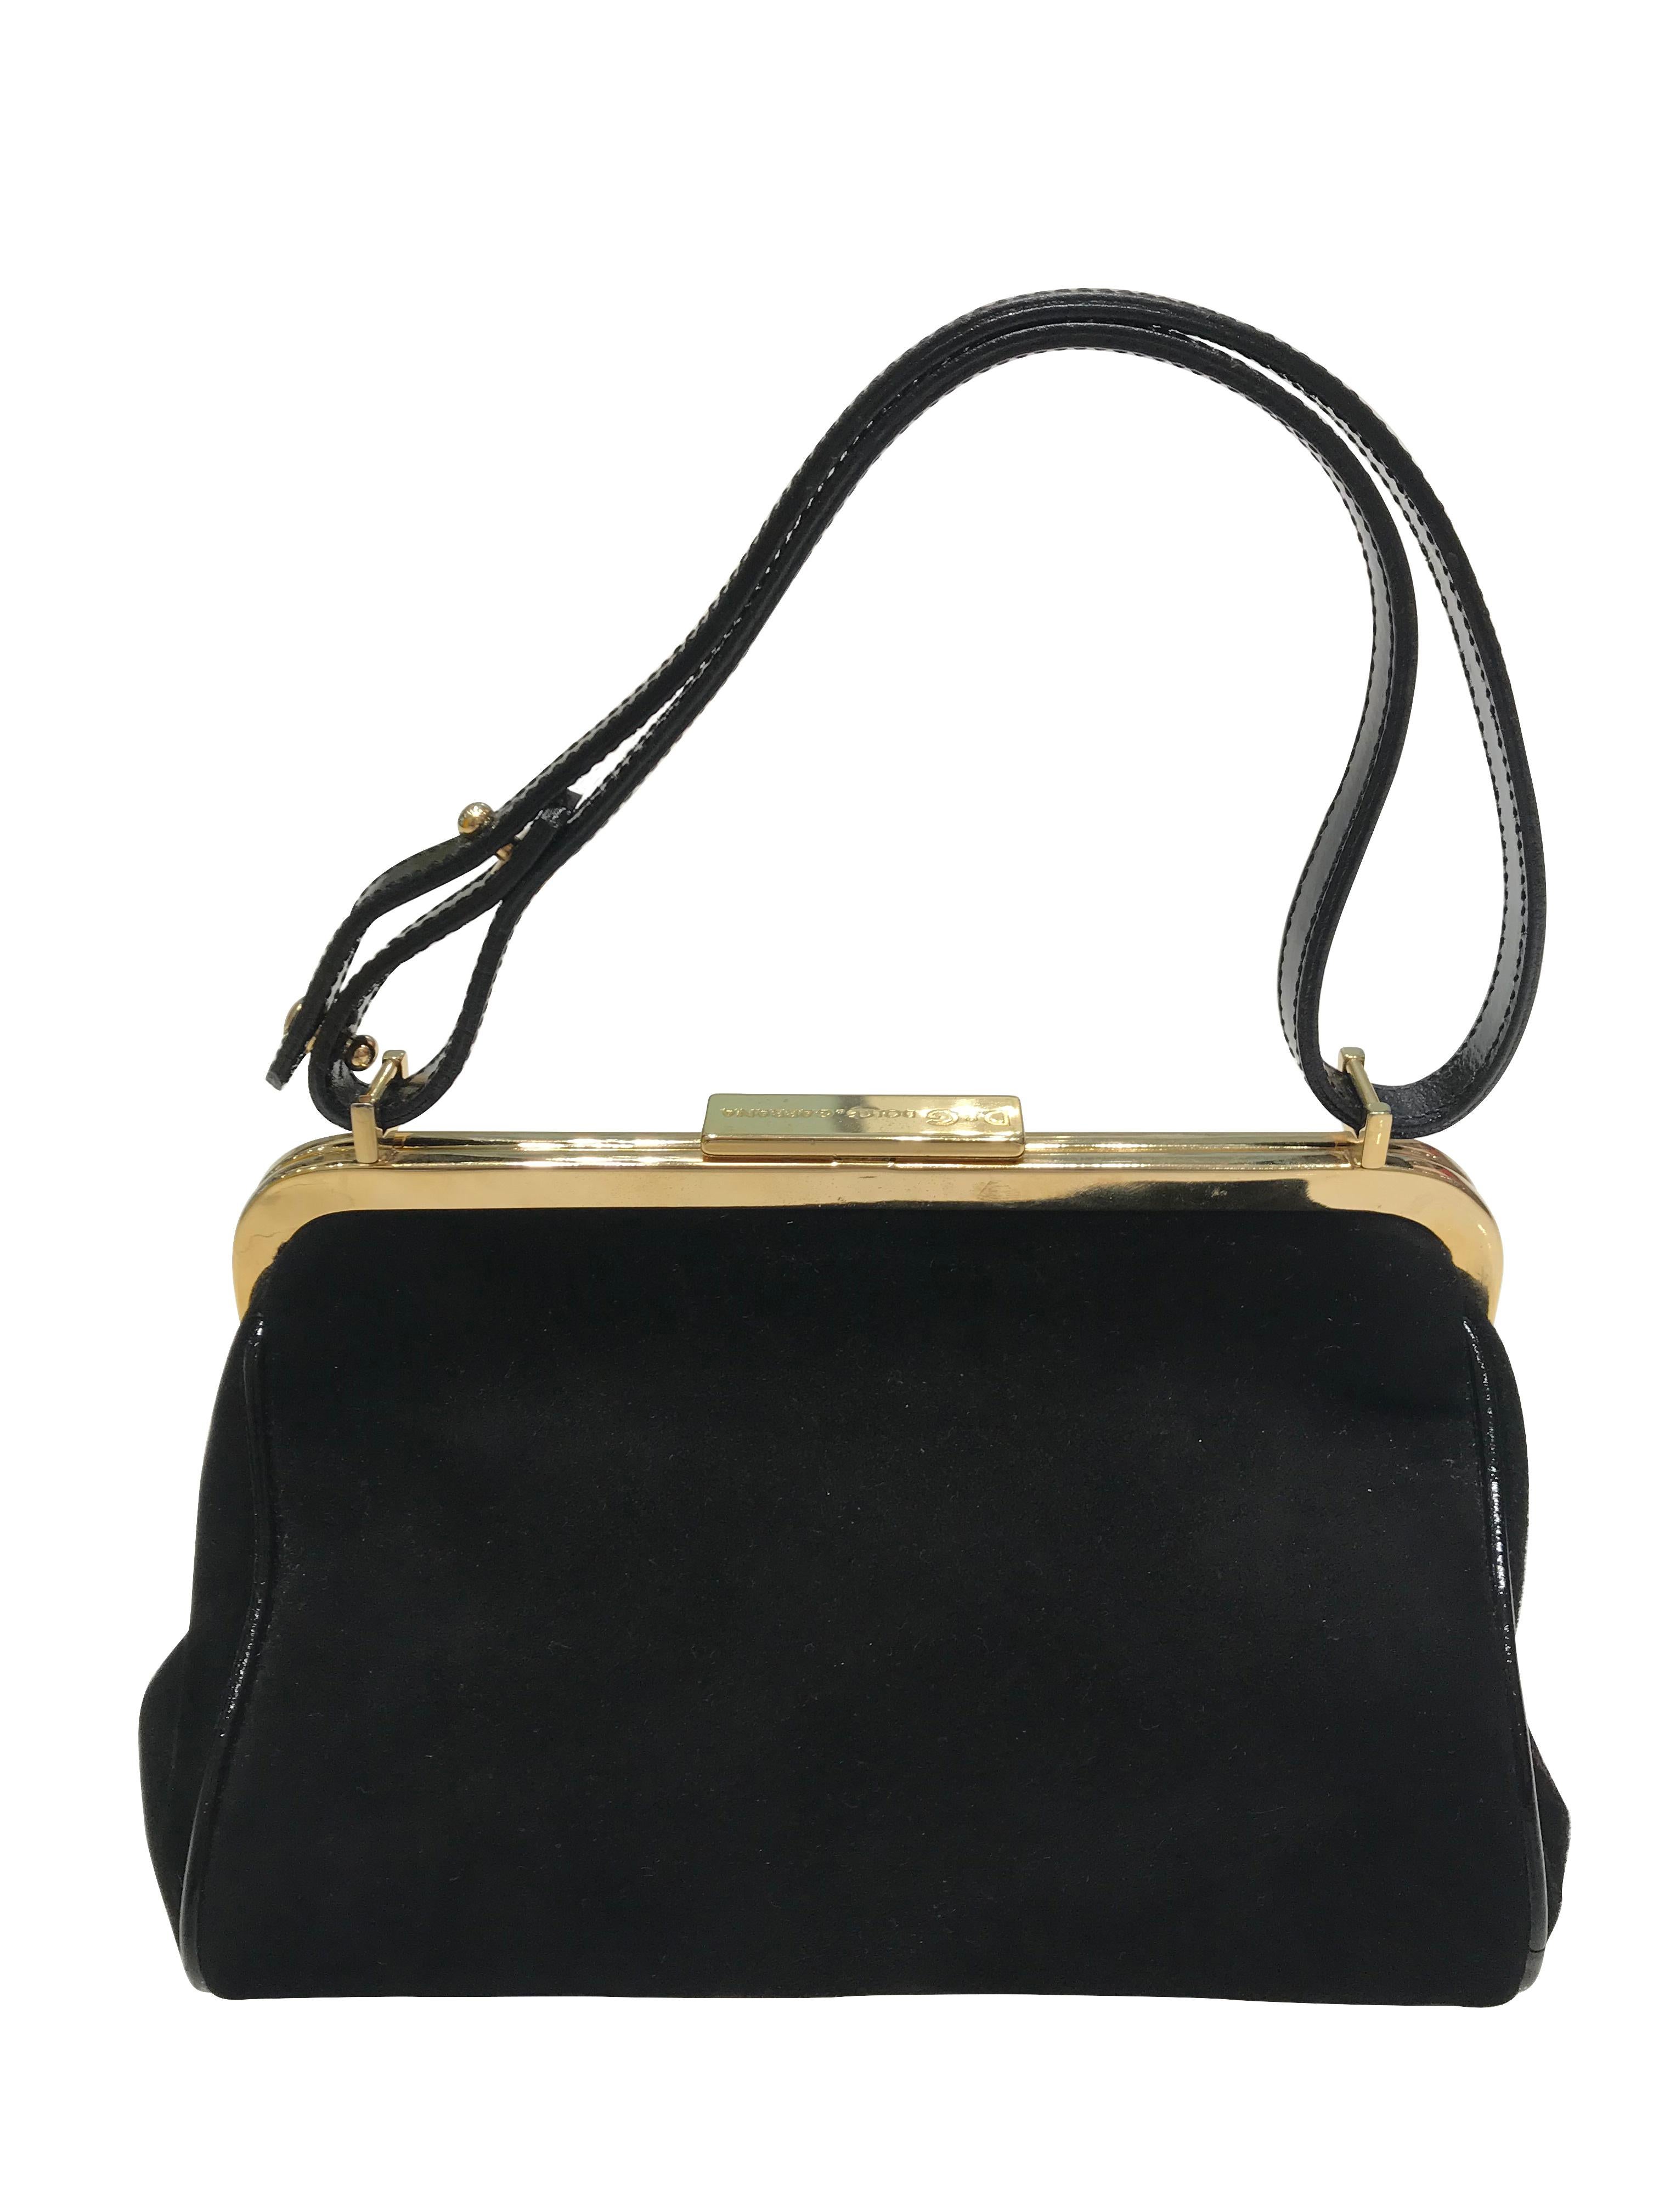 Dolce & Gabbana Black Suede Handbag  In Good Condition For Sale In Palm Beach, FL